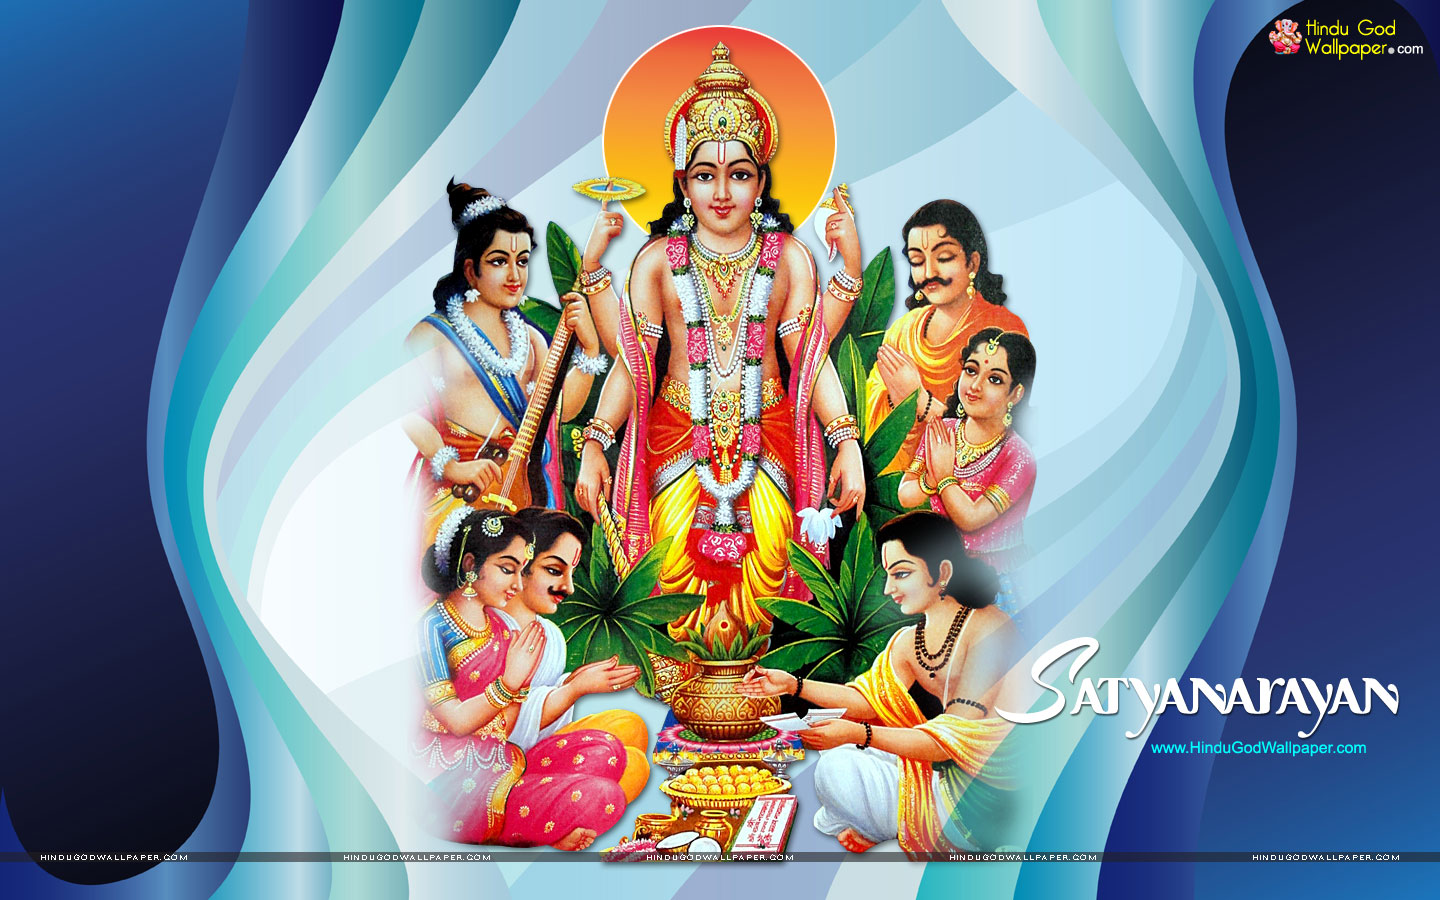 Hindu God Wallpapers In Best Px Resolutions - Satyanarayan Pooja Invitation  Card - 1440x900 Wallpaper 